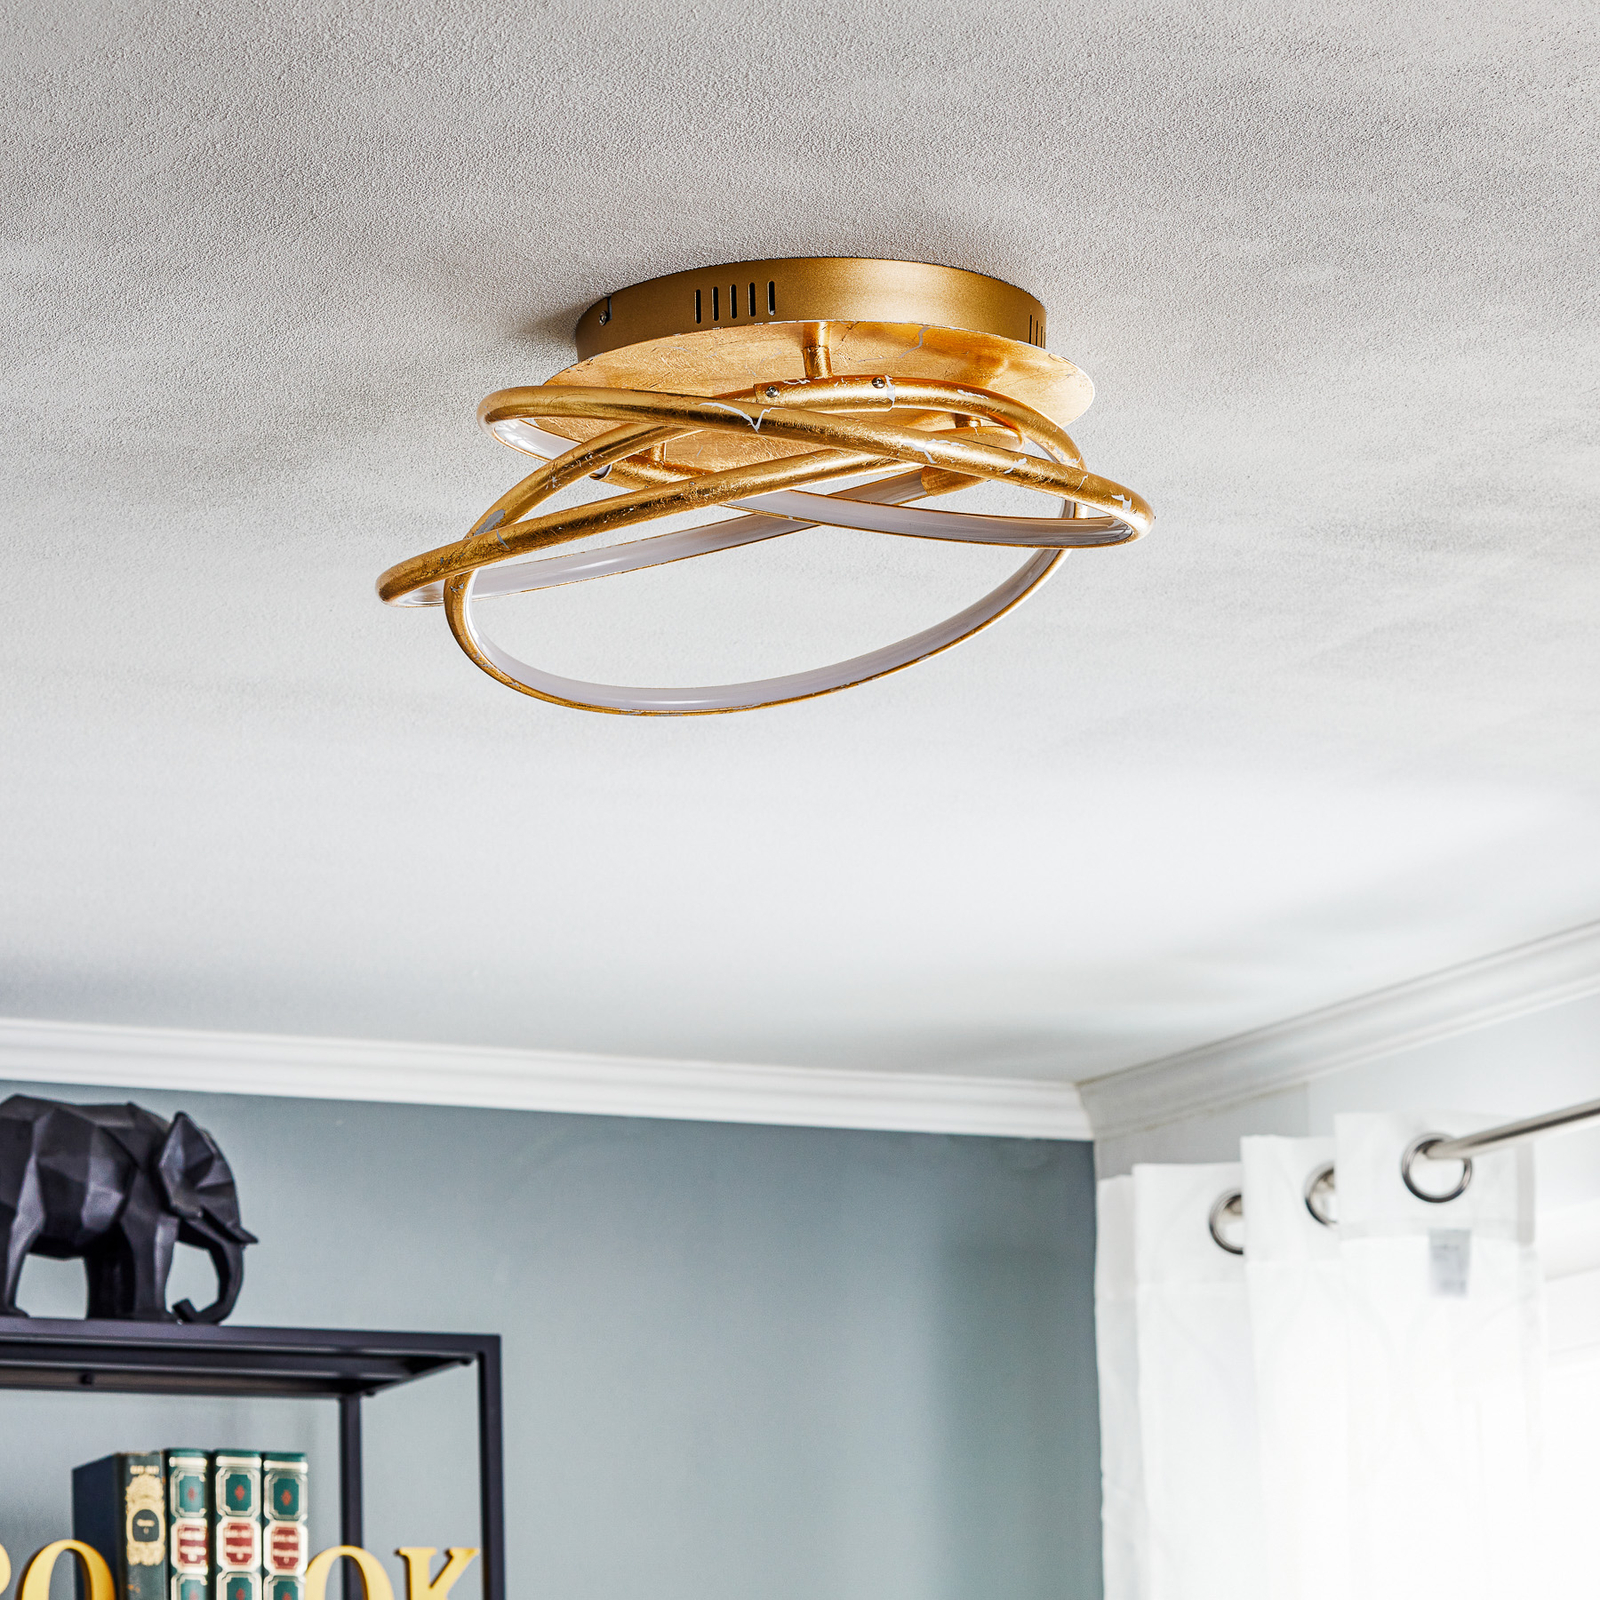 Barna - an LED ceiling lamp in a golden design